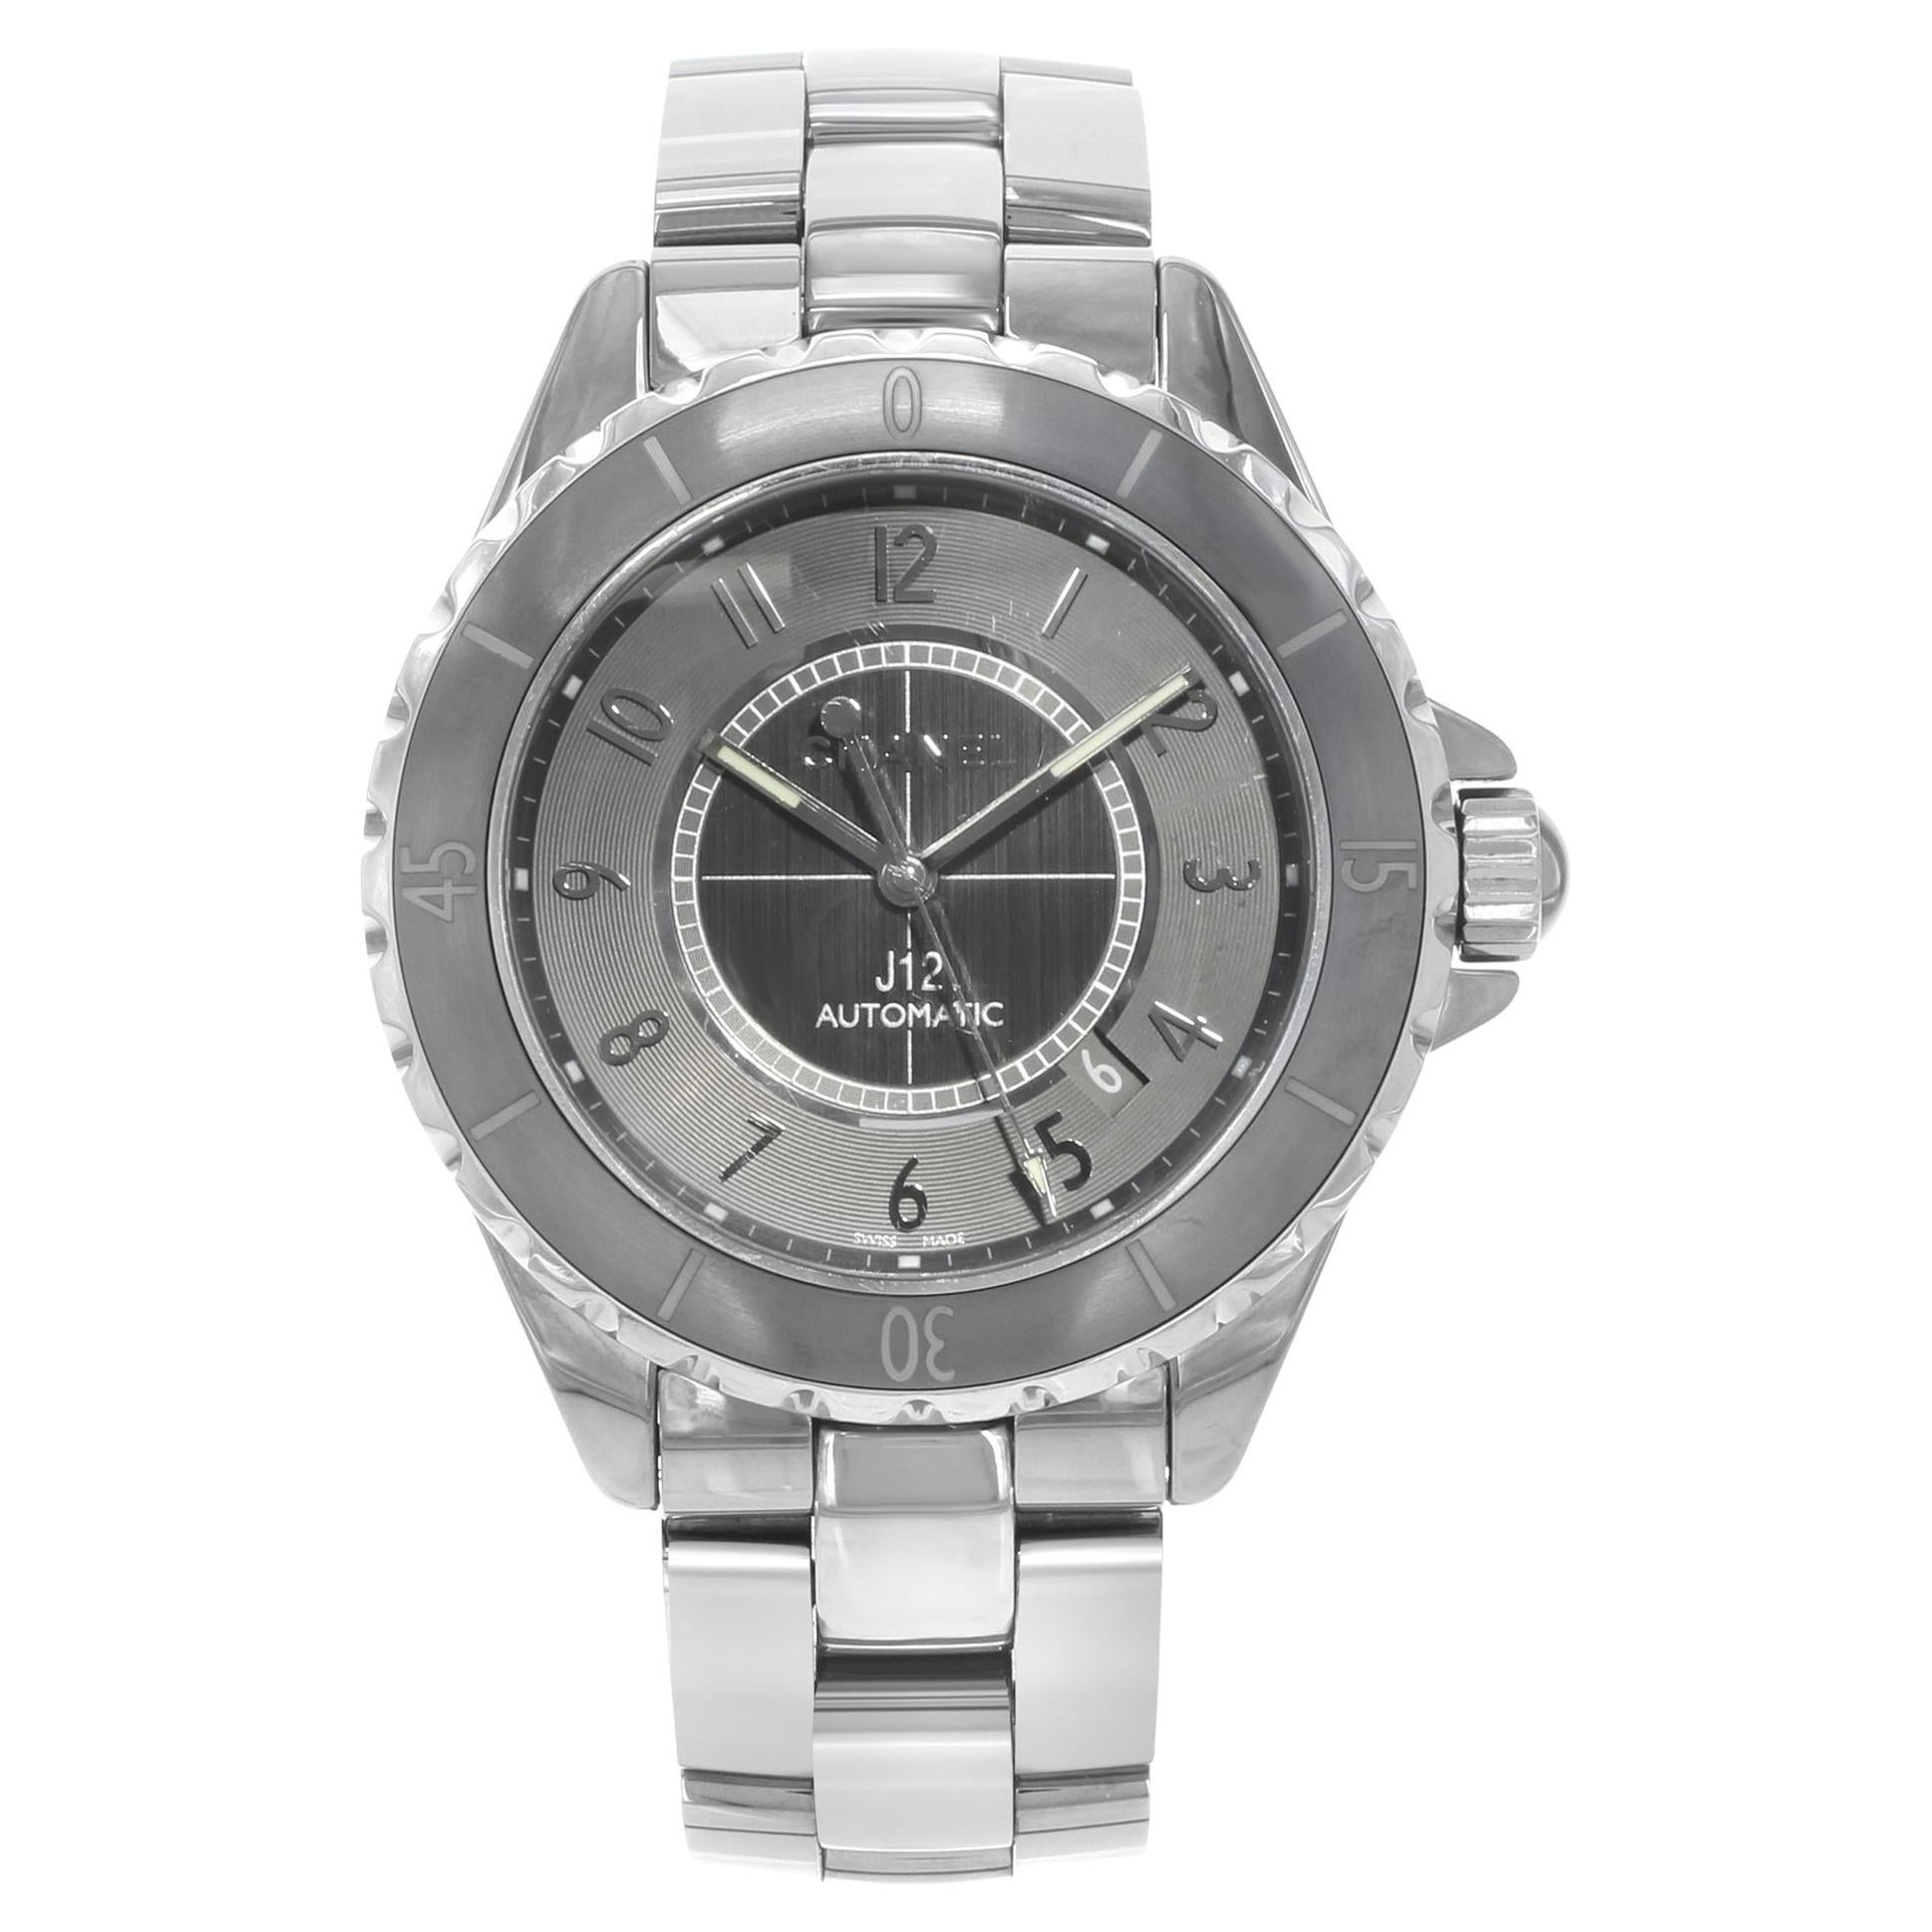 Chanel J12 White Watch